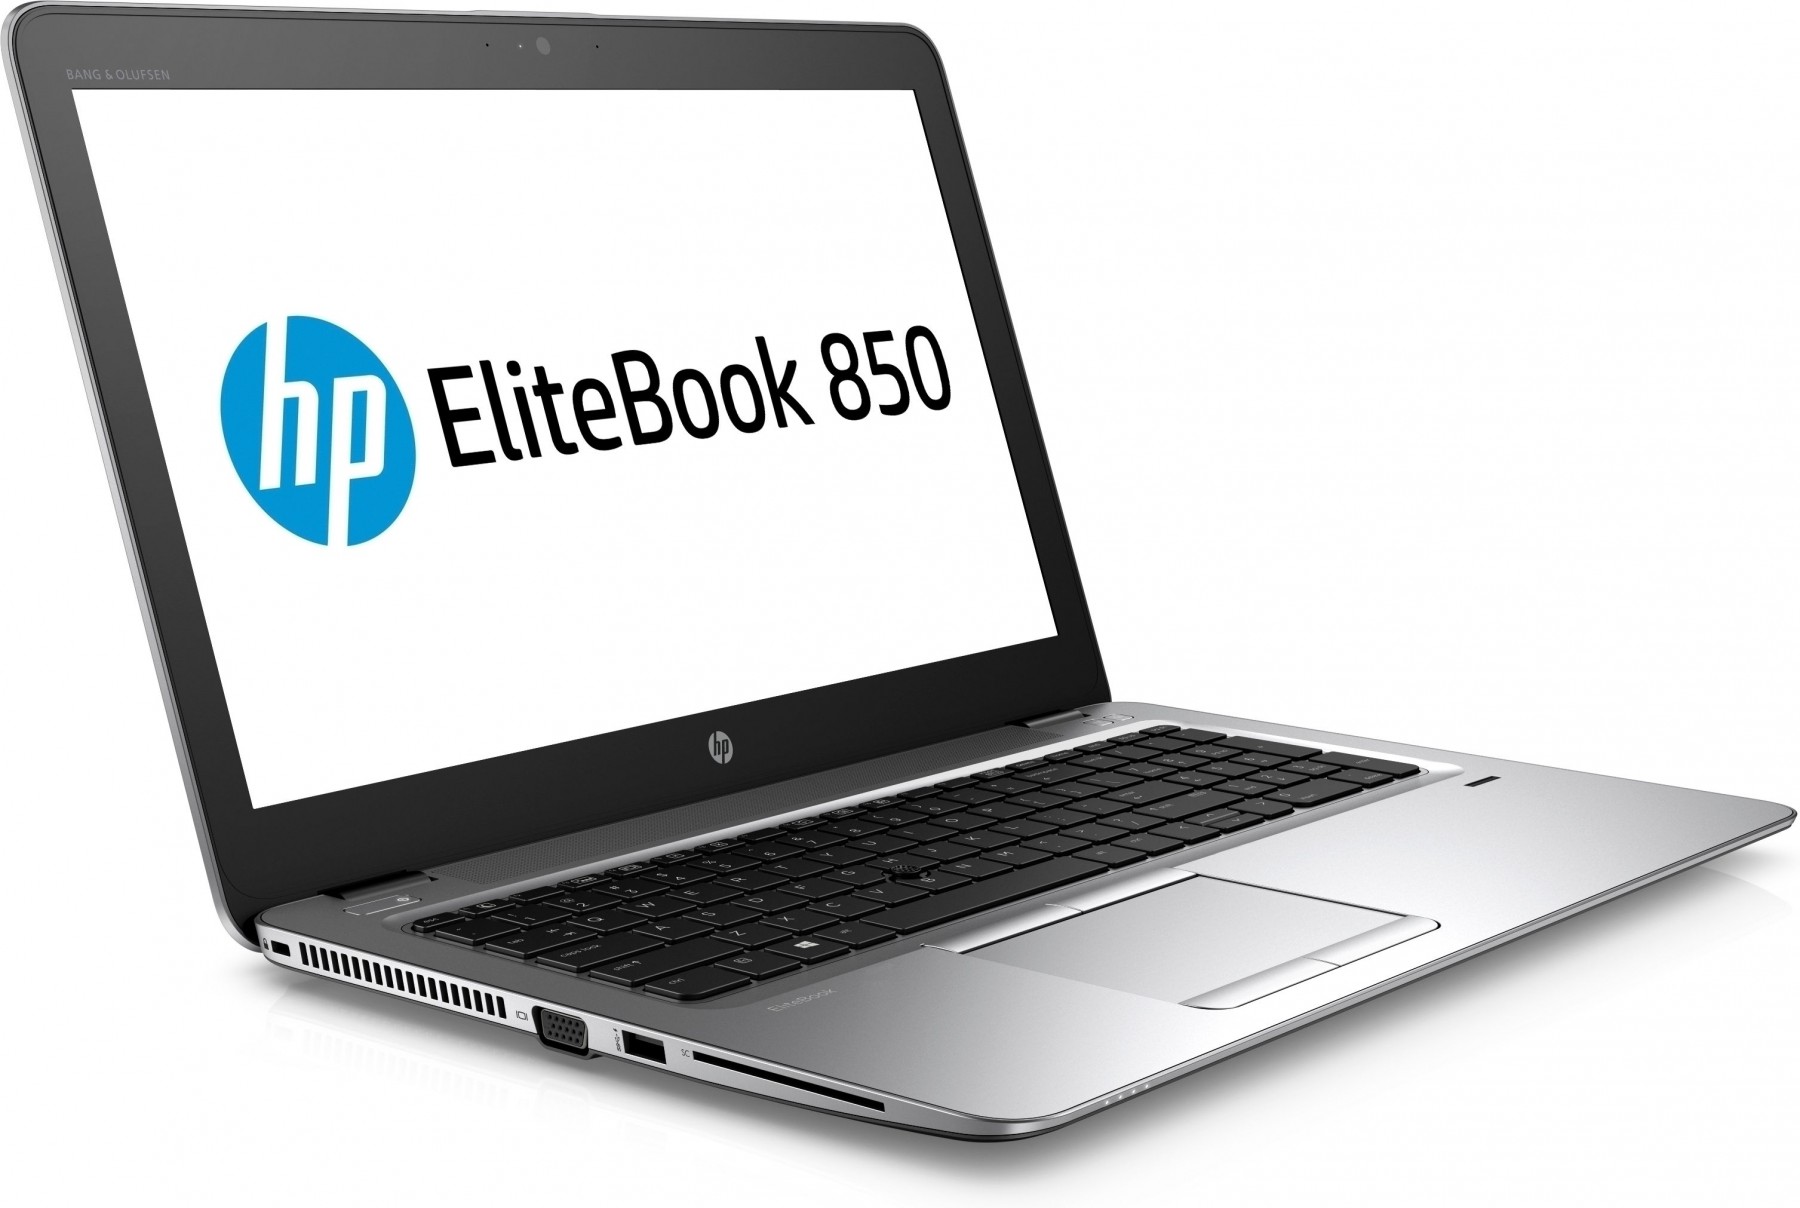 HP EliteBook 850 G3 Intel Core i5 6200 2.2Ghz 8GB RAM 256GB SDD 15.6